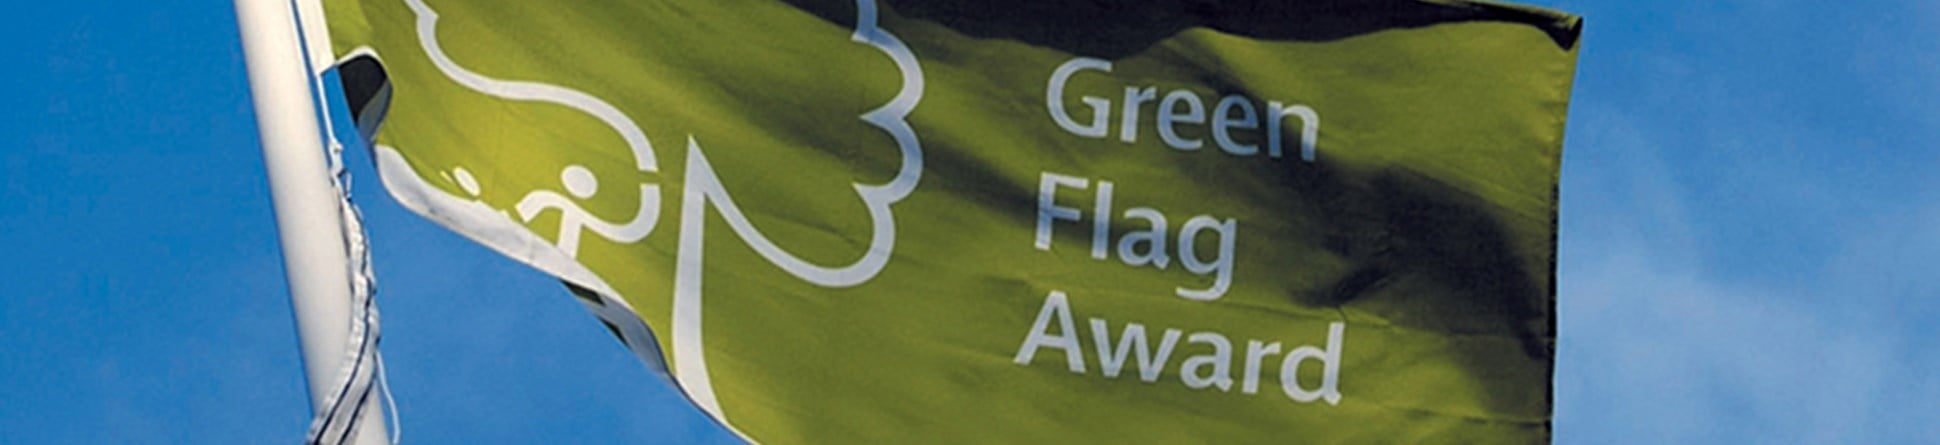 Photograph of the Green Flag Awards Flag